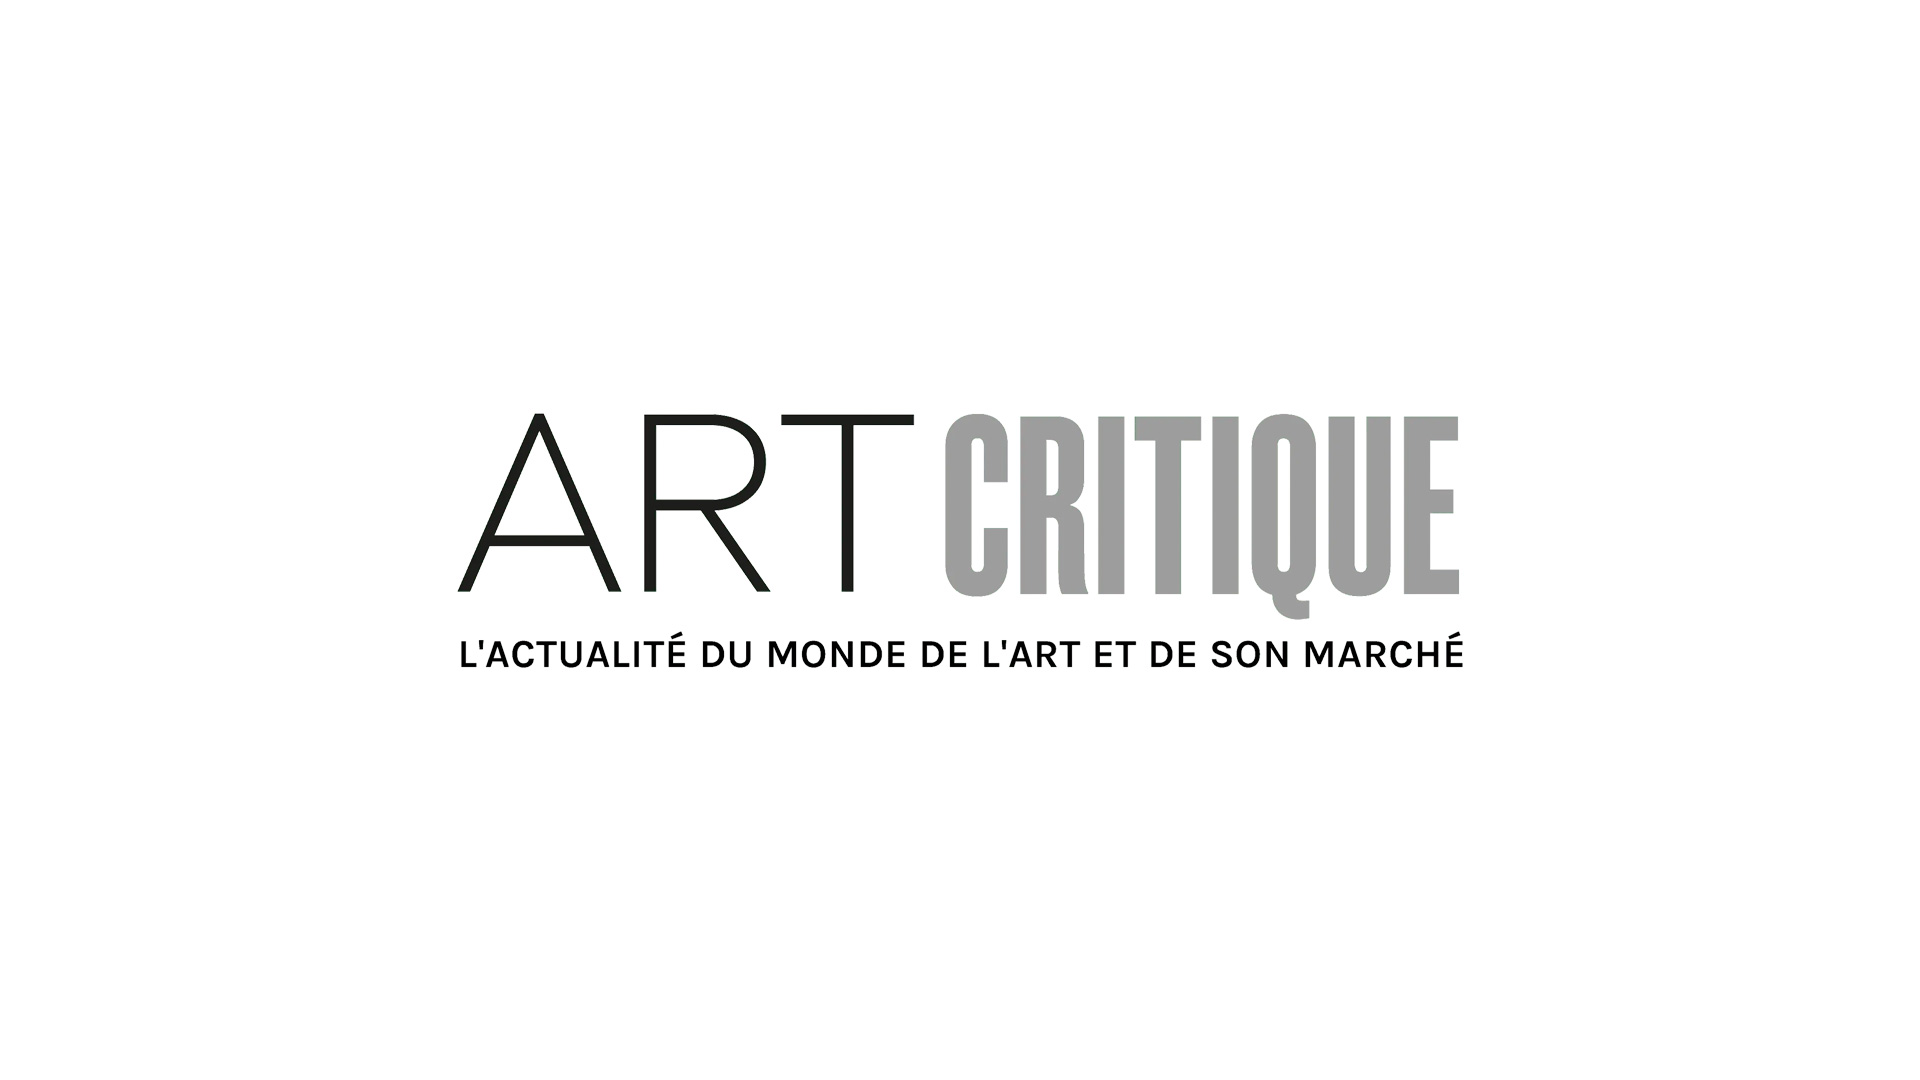 Christo to wrap Paris’ Arc de Triomphe in 2020